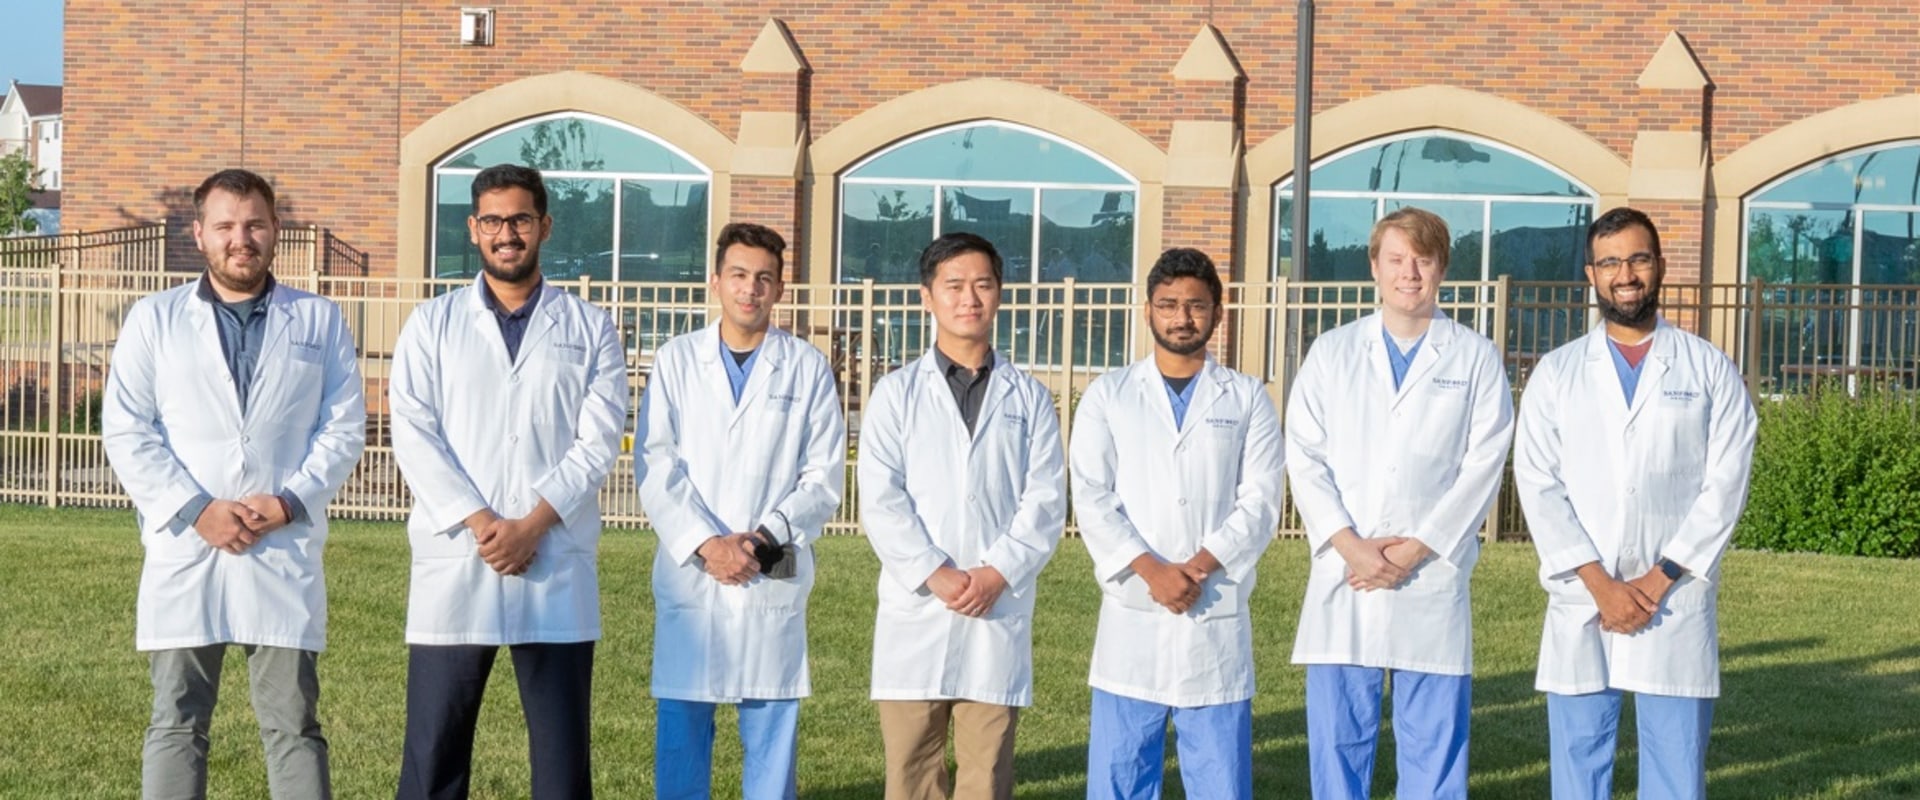 Success of International Medical School Graduates in Obtaining Faculty Positions